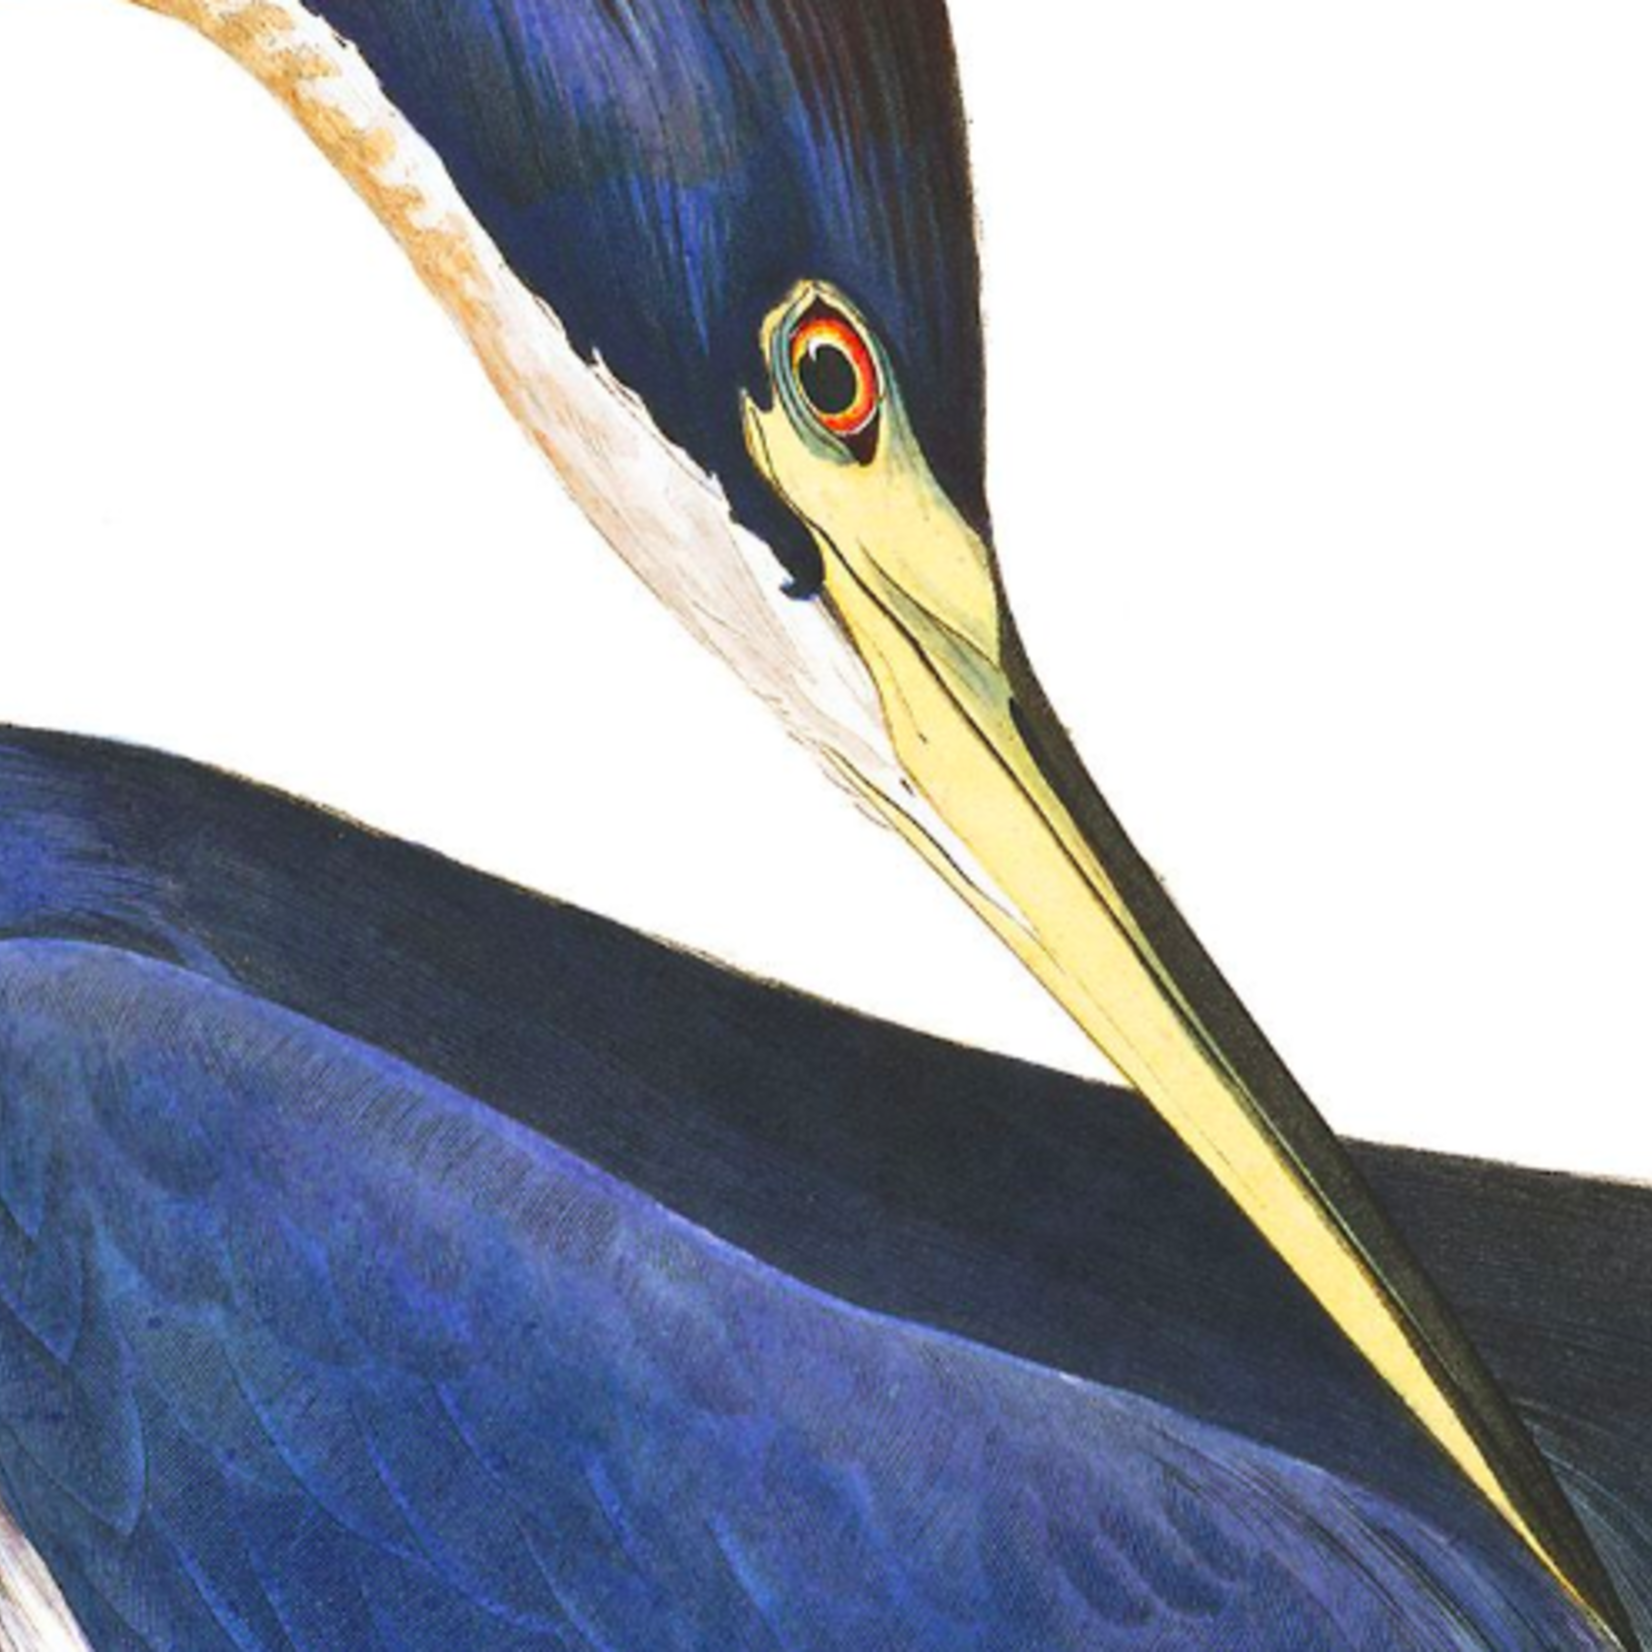 Framed Print on Rag Paper: Louisiana Heron by John James Audubon